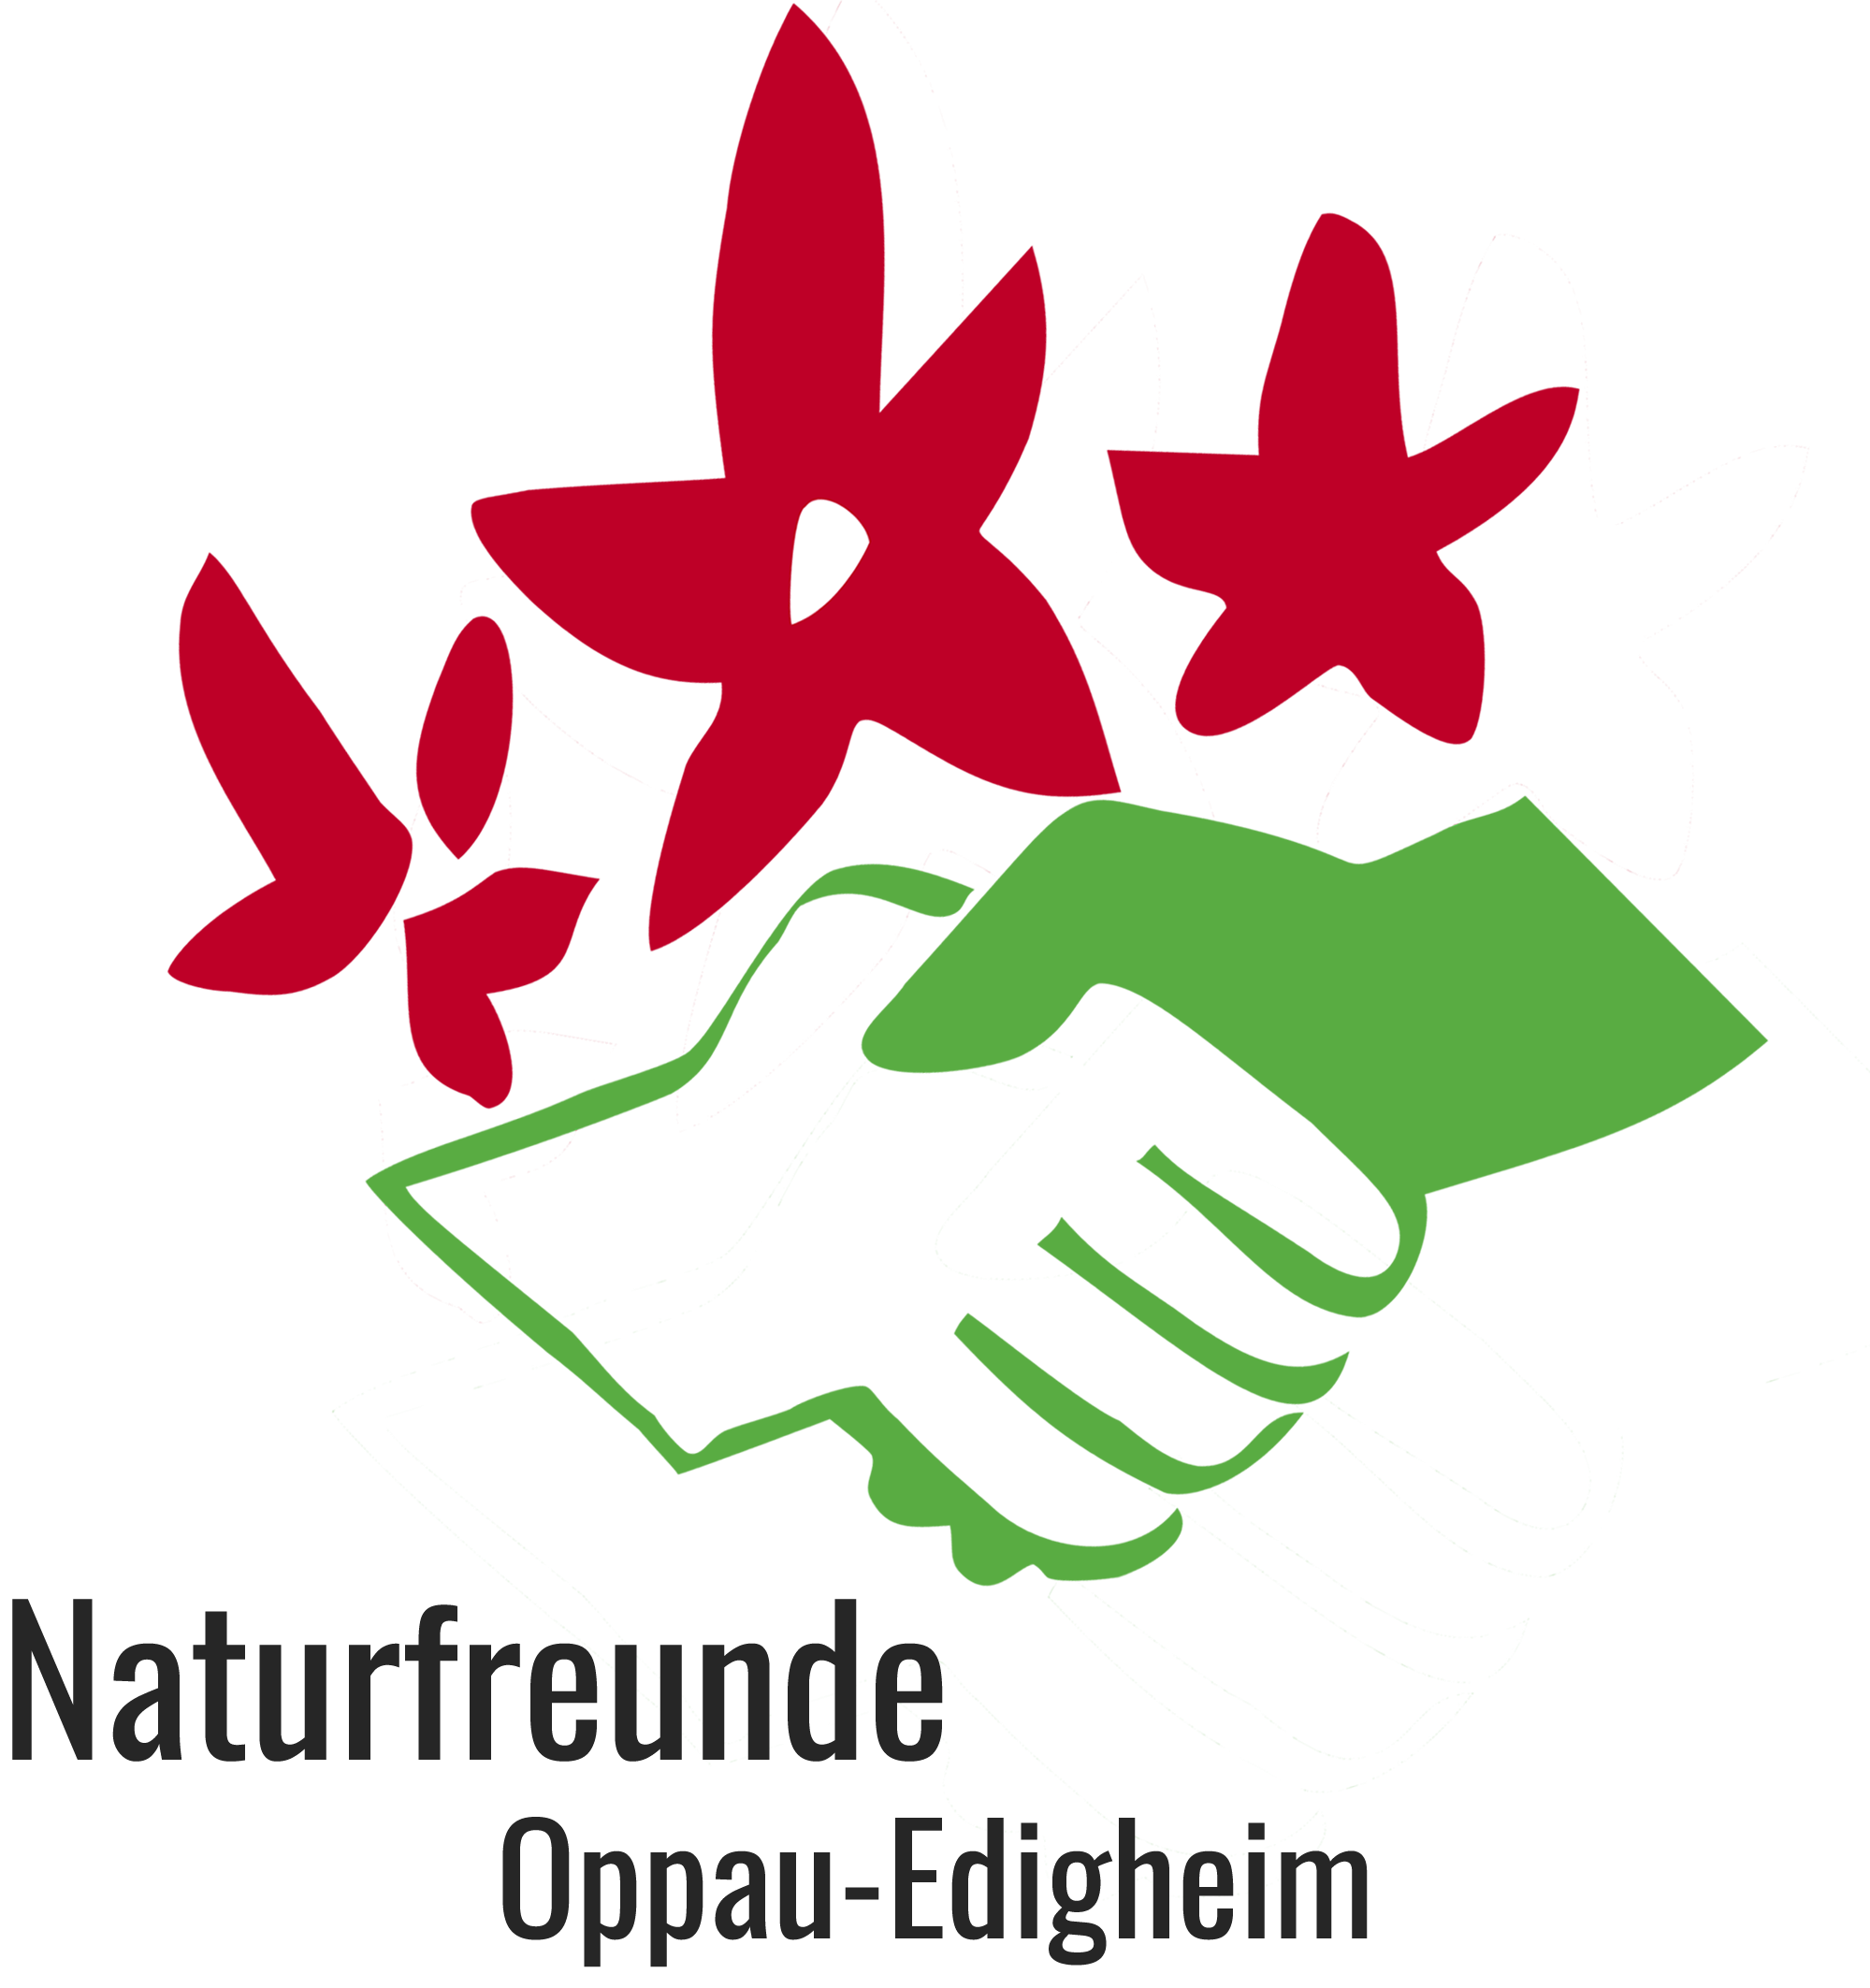 Naturfreunde Oppau-Edigheim